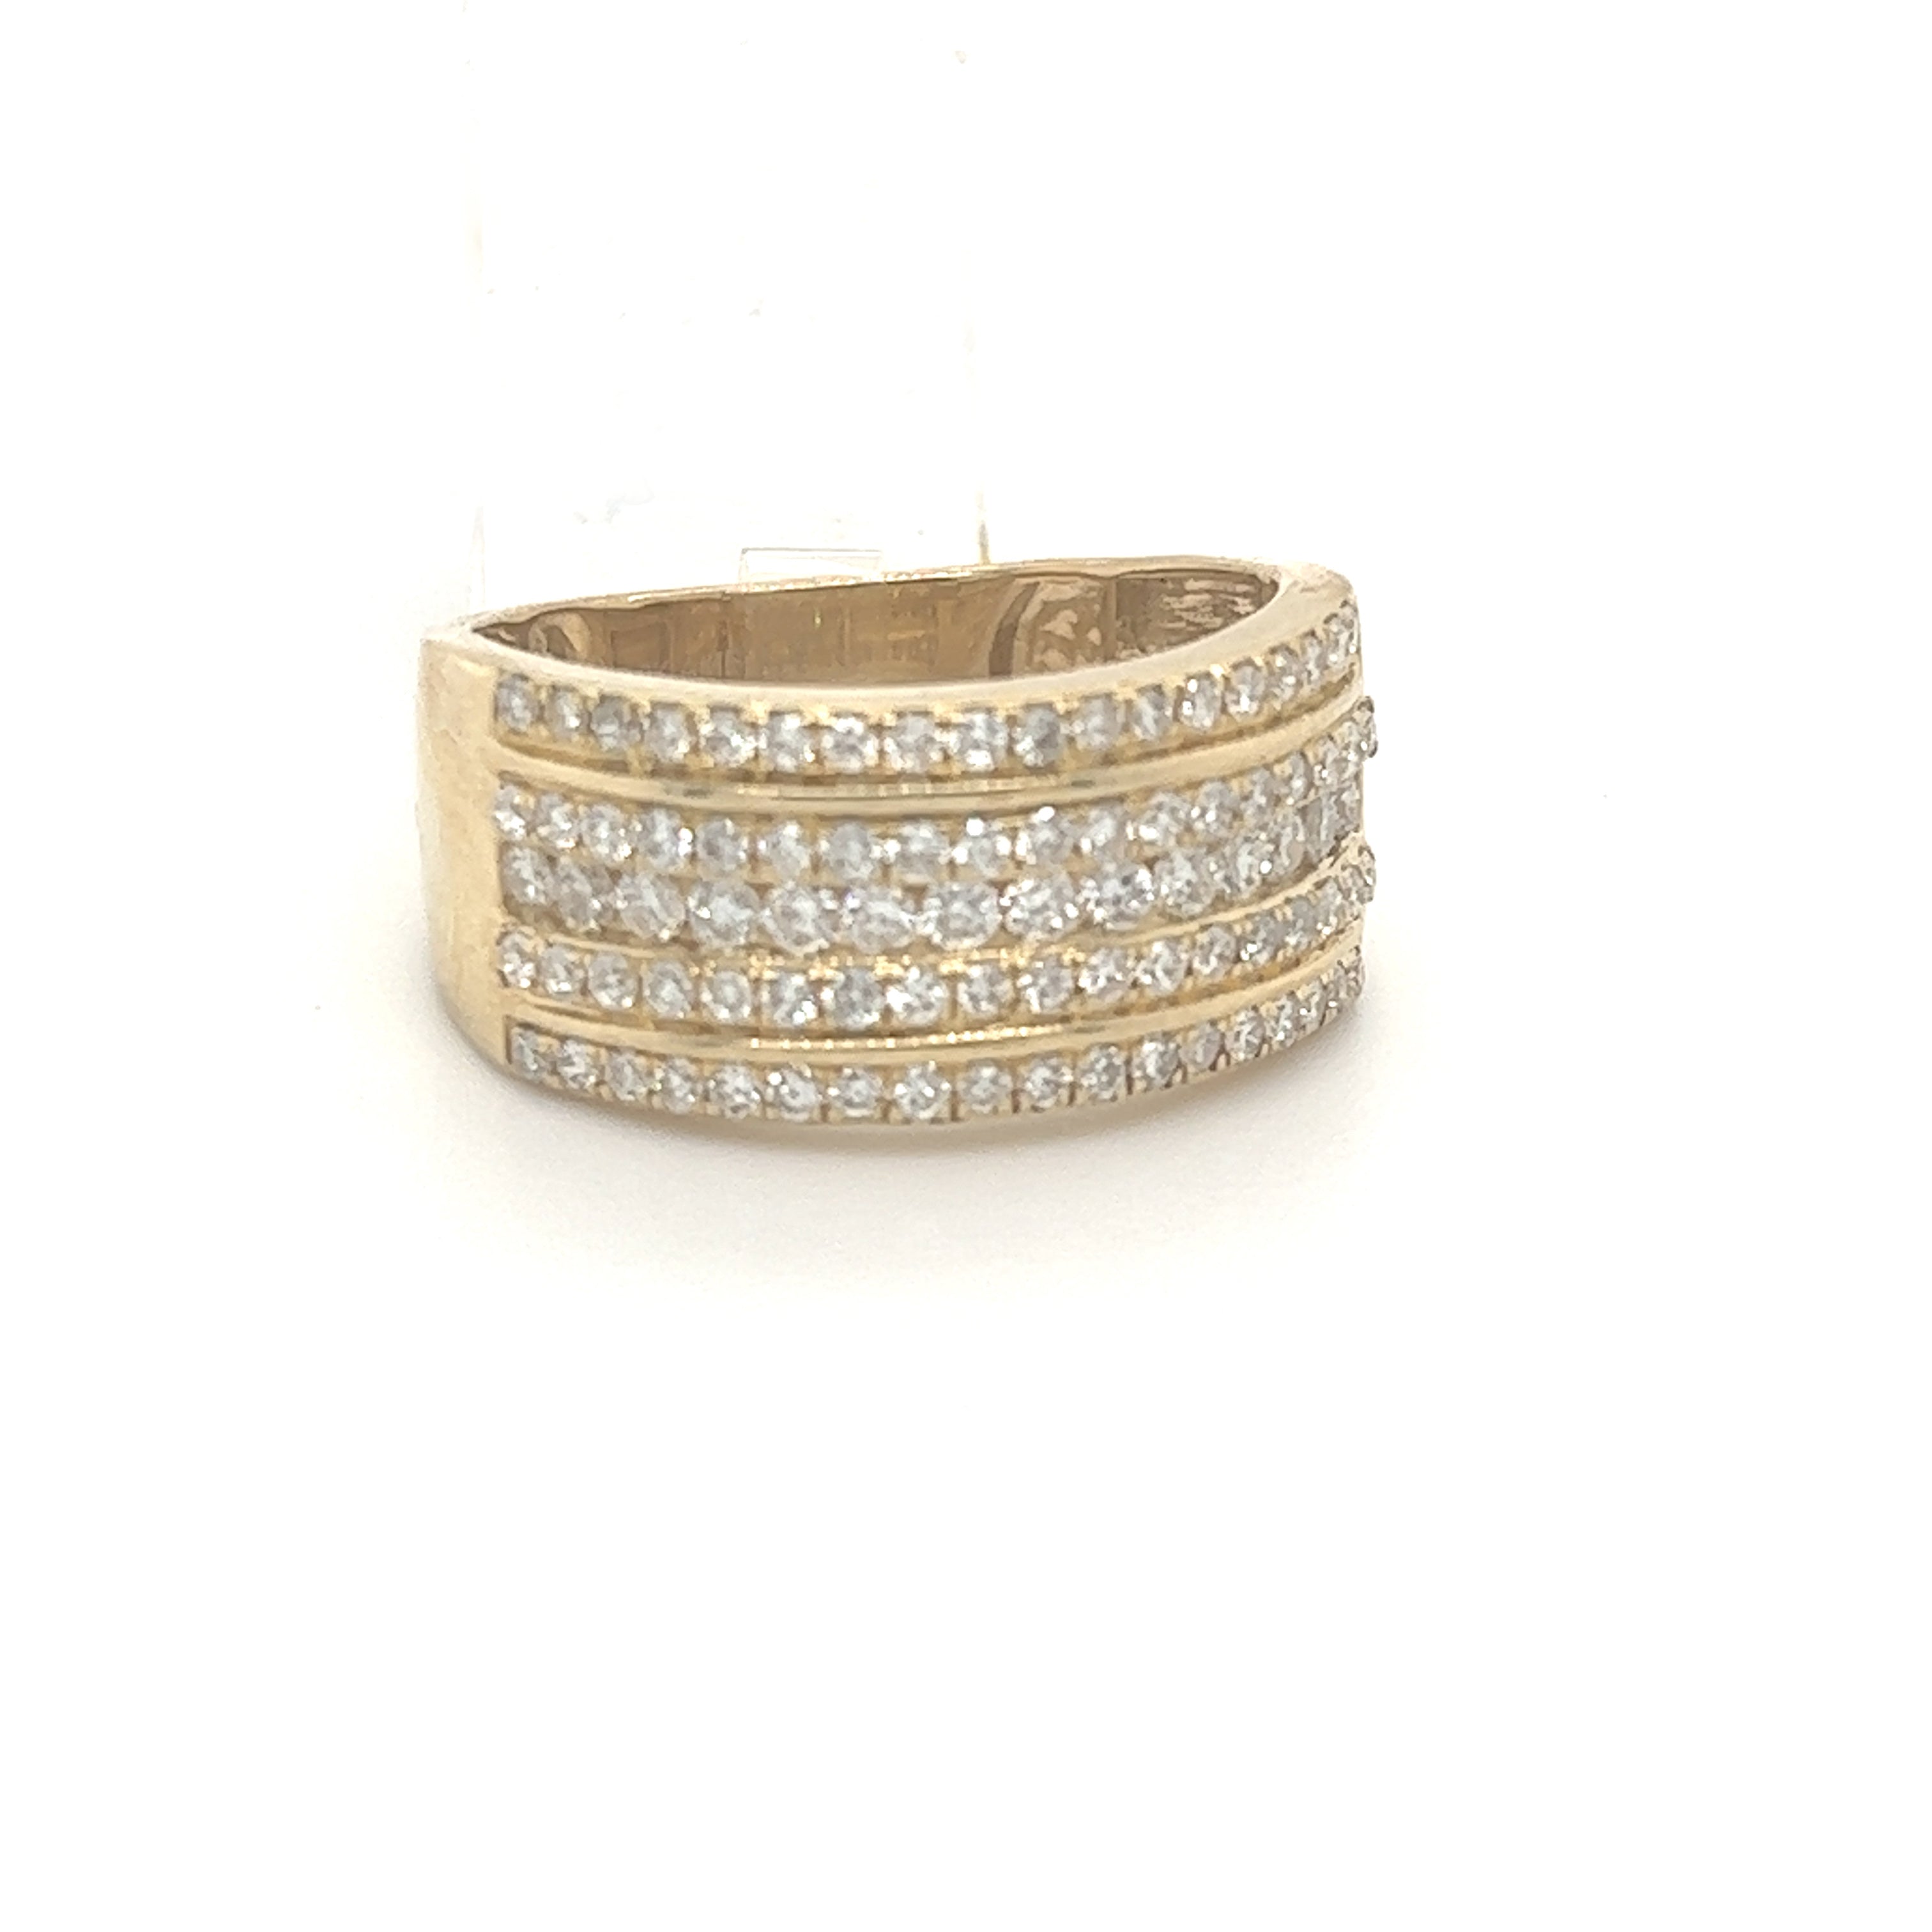 1.31CT. Diamond Ring in 10K Gold - White Carat - USA & Canada